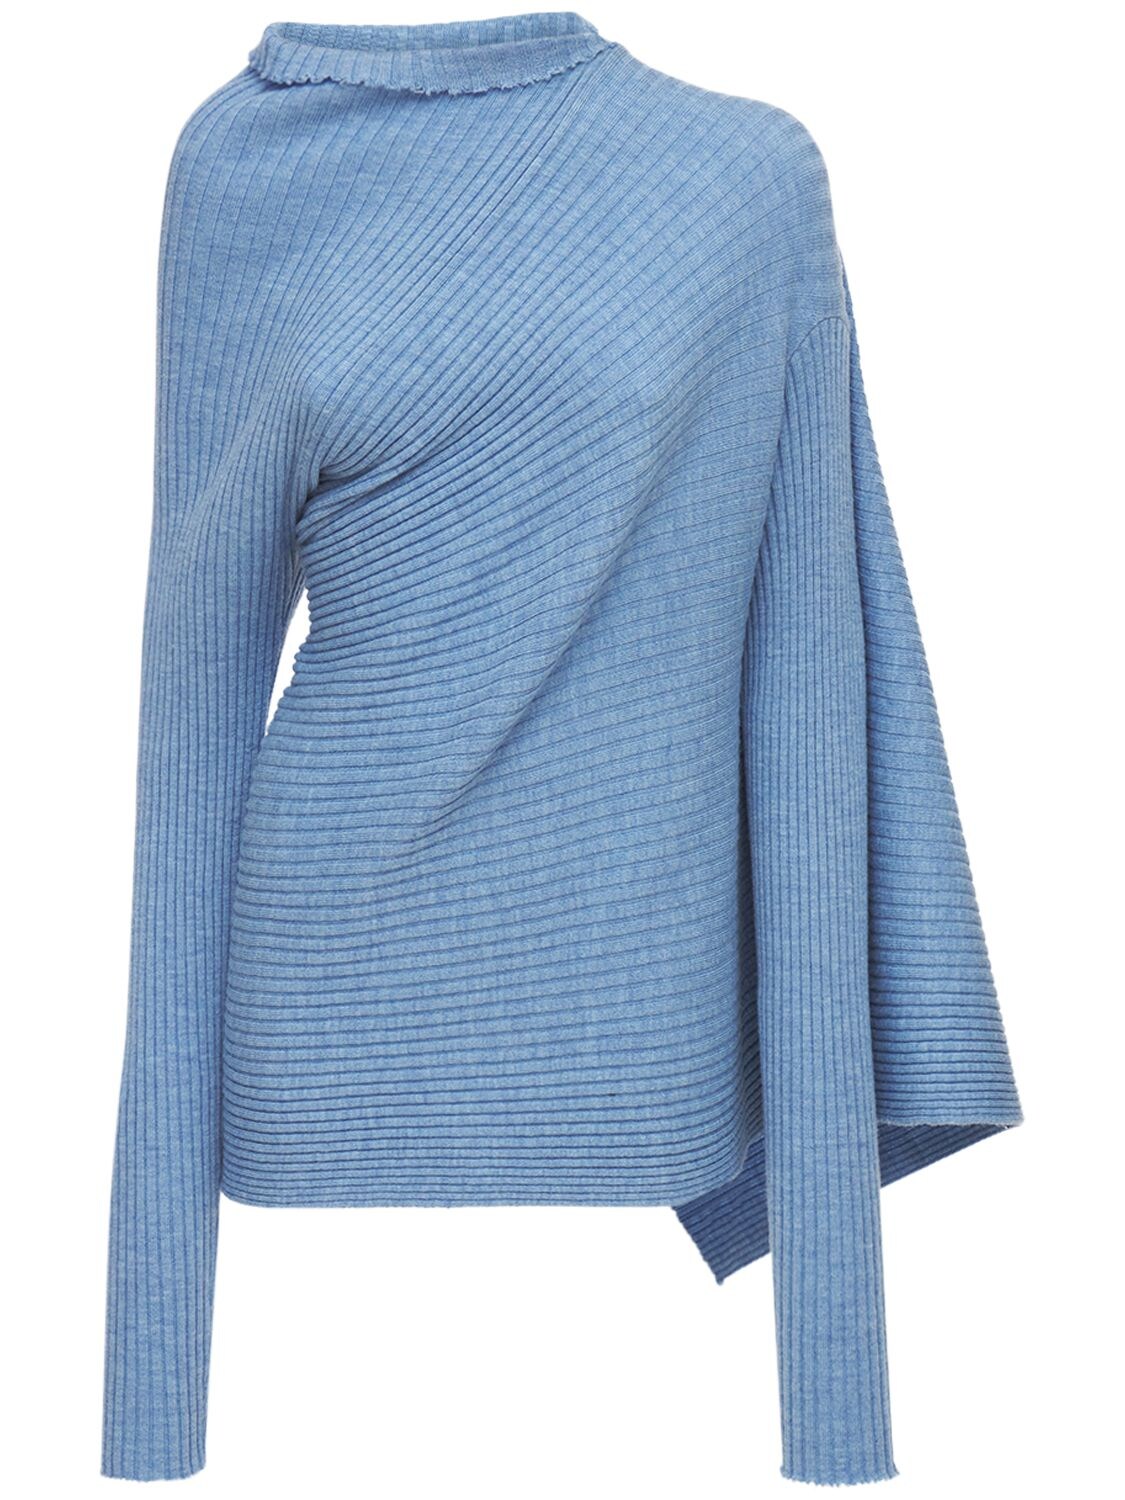 MARQUES'ALMEIDA Draped Merino Wool Knit Sweater